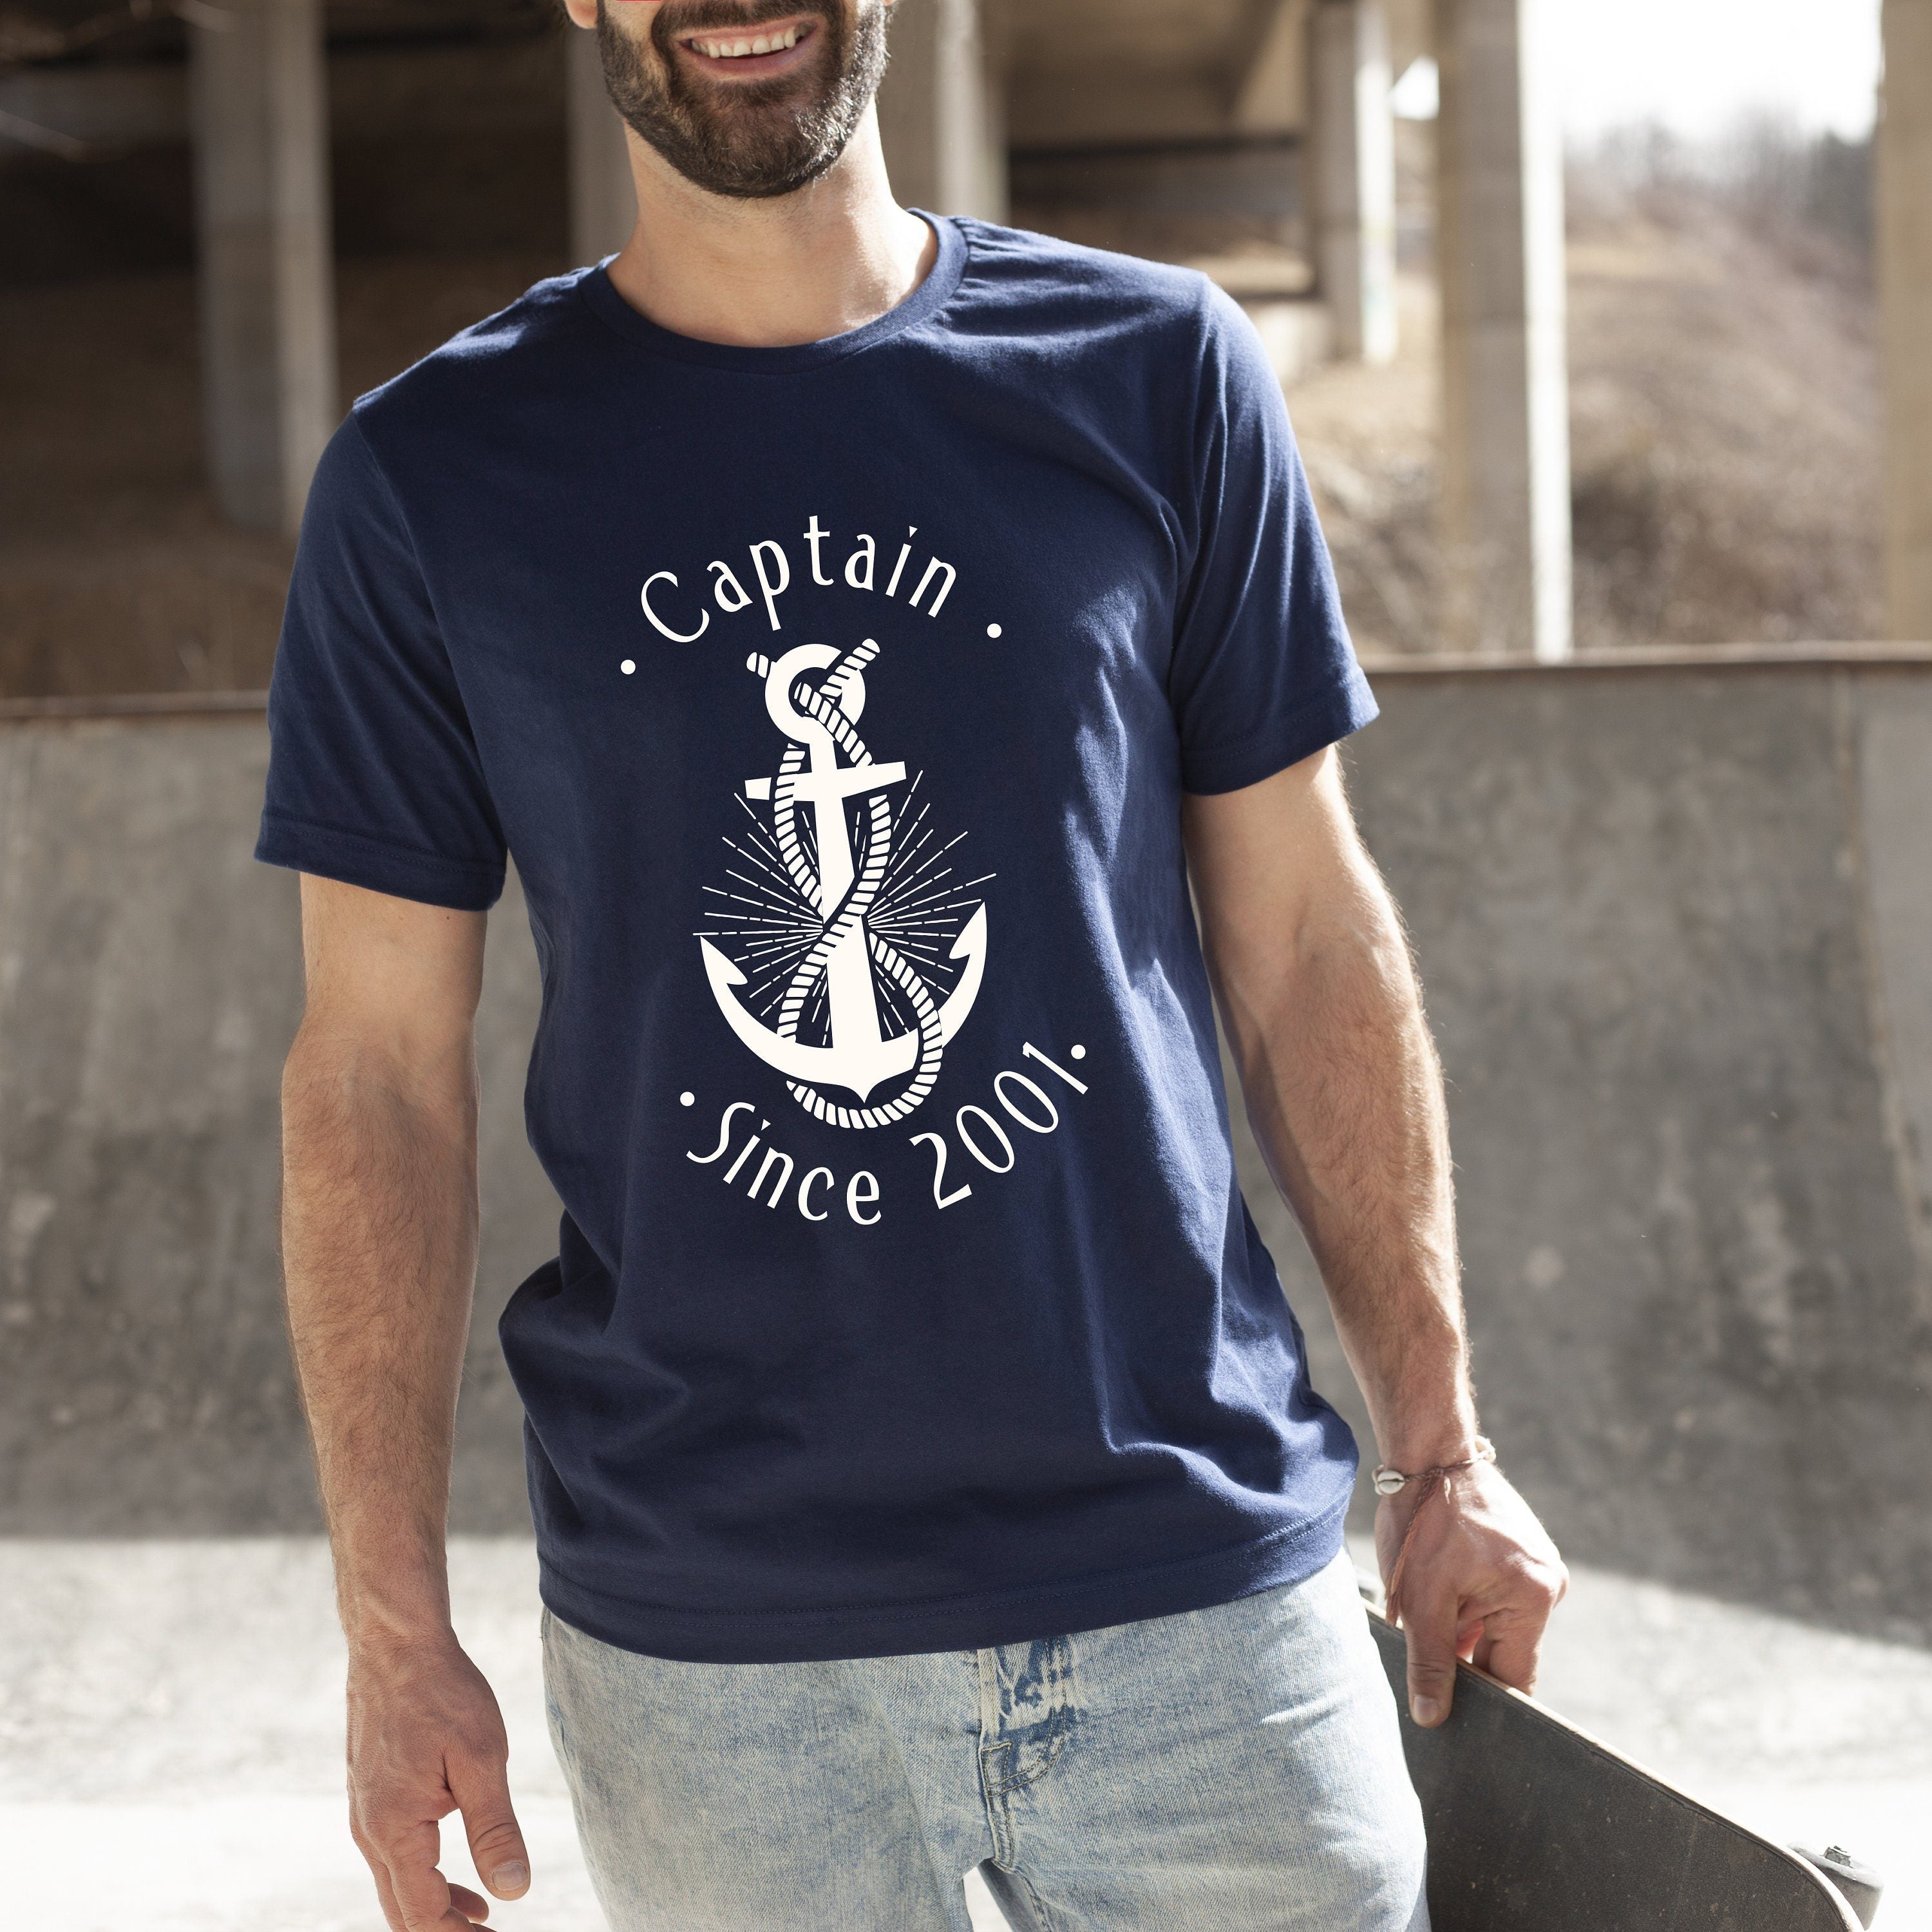 Captain birthday T-Shirt, Nautical Shirt, Navy blue unisex captain shirt, Anchor summer sailing boat tee